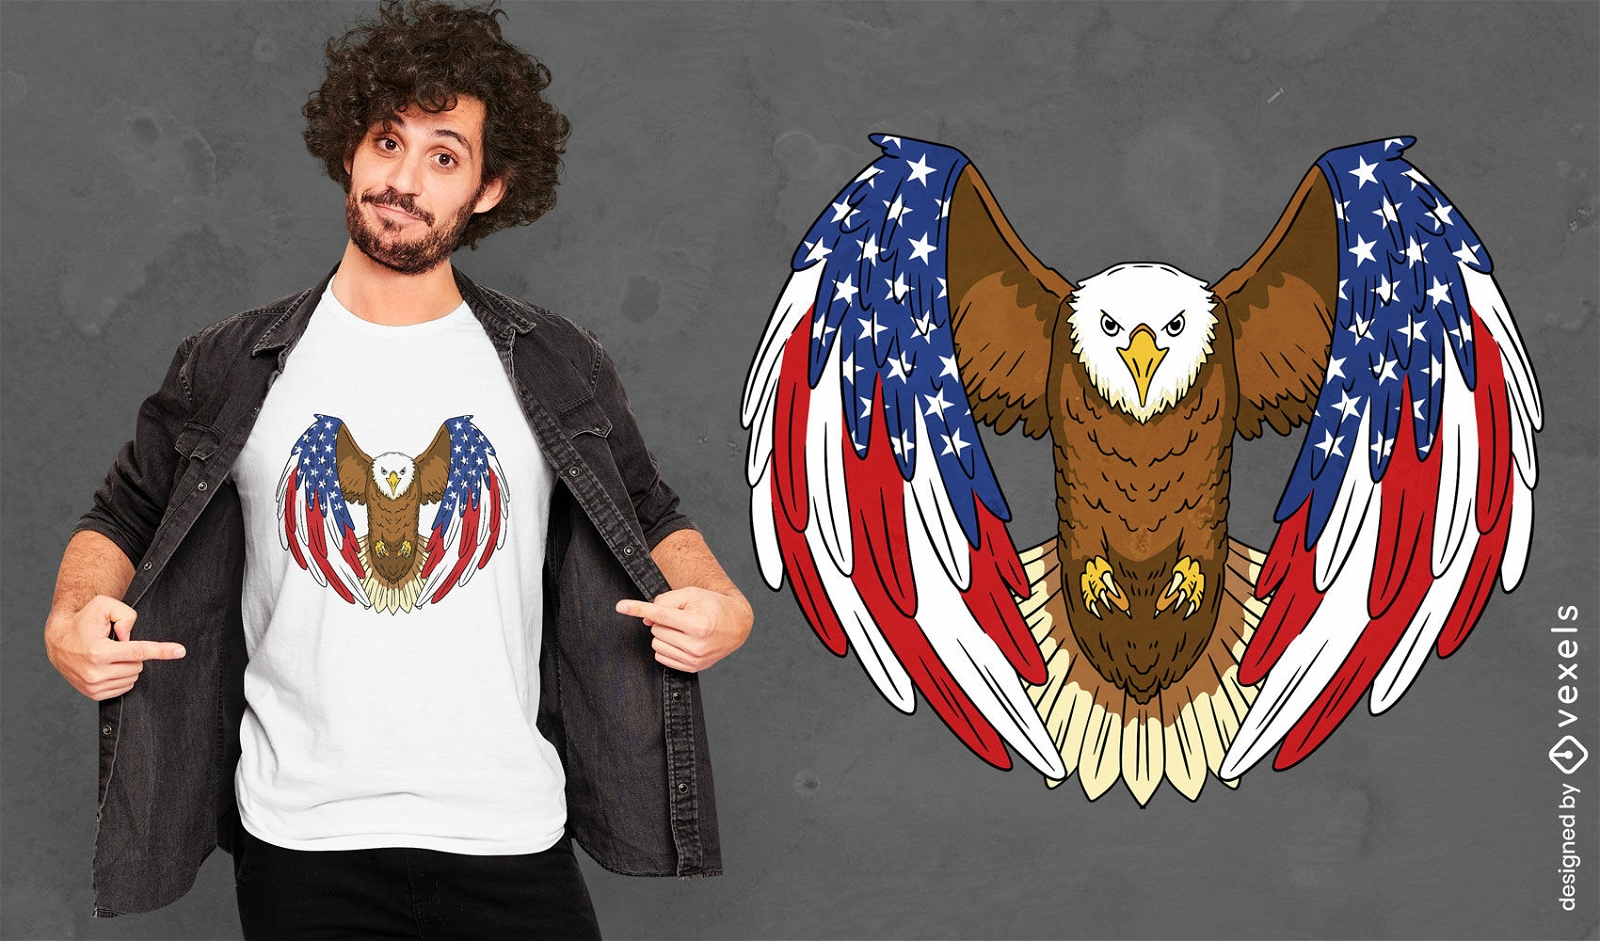 Dise?o de camiseta de ?guila con bandera americana en alas